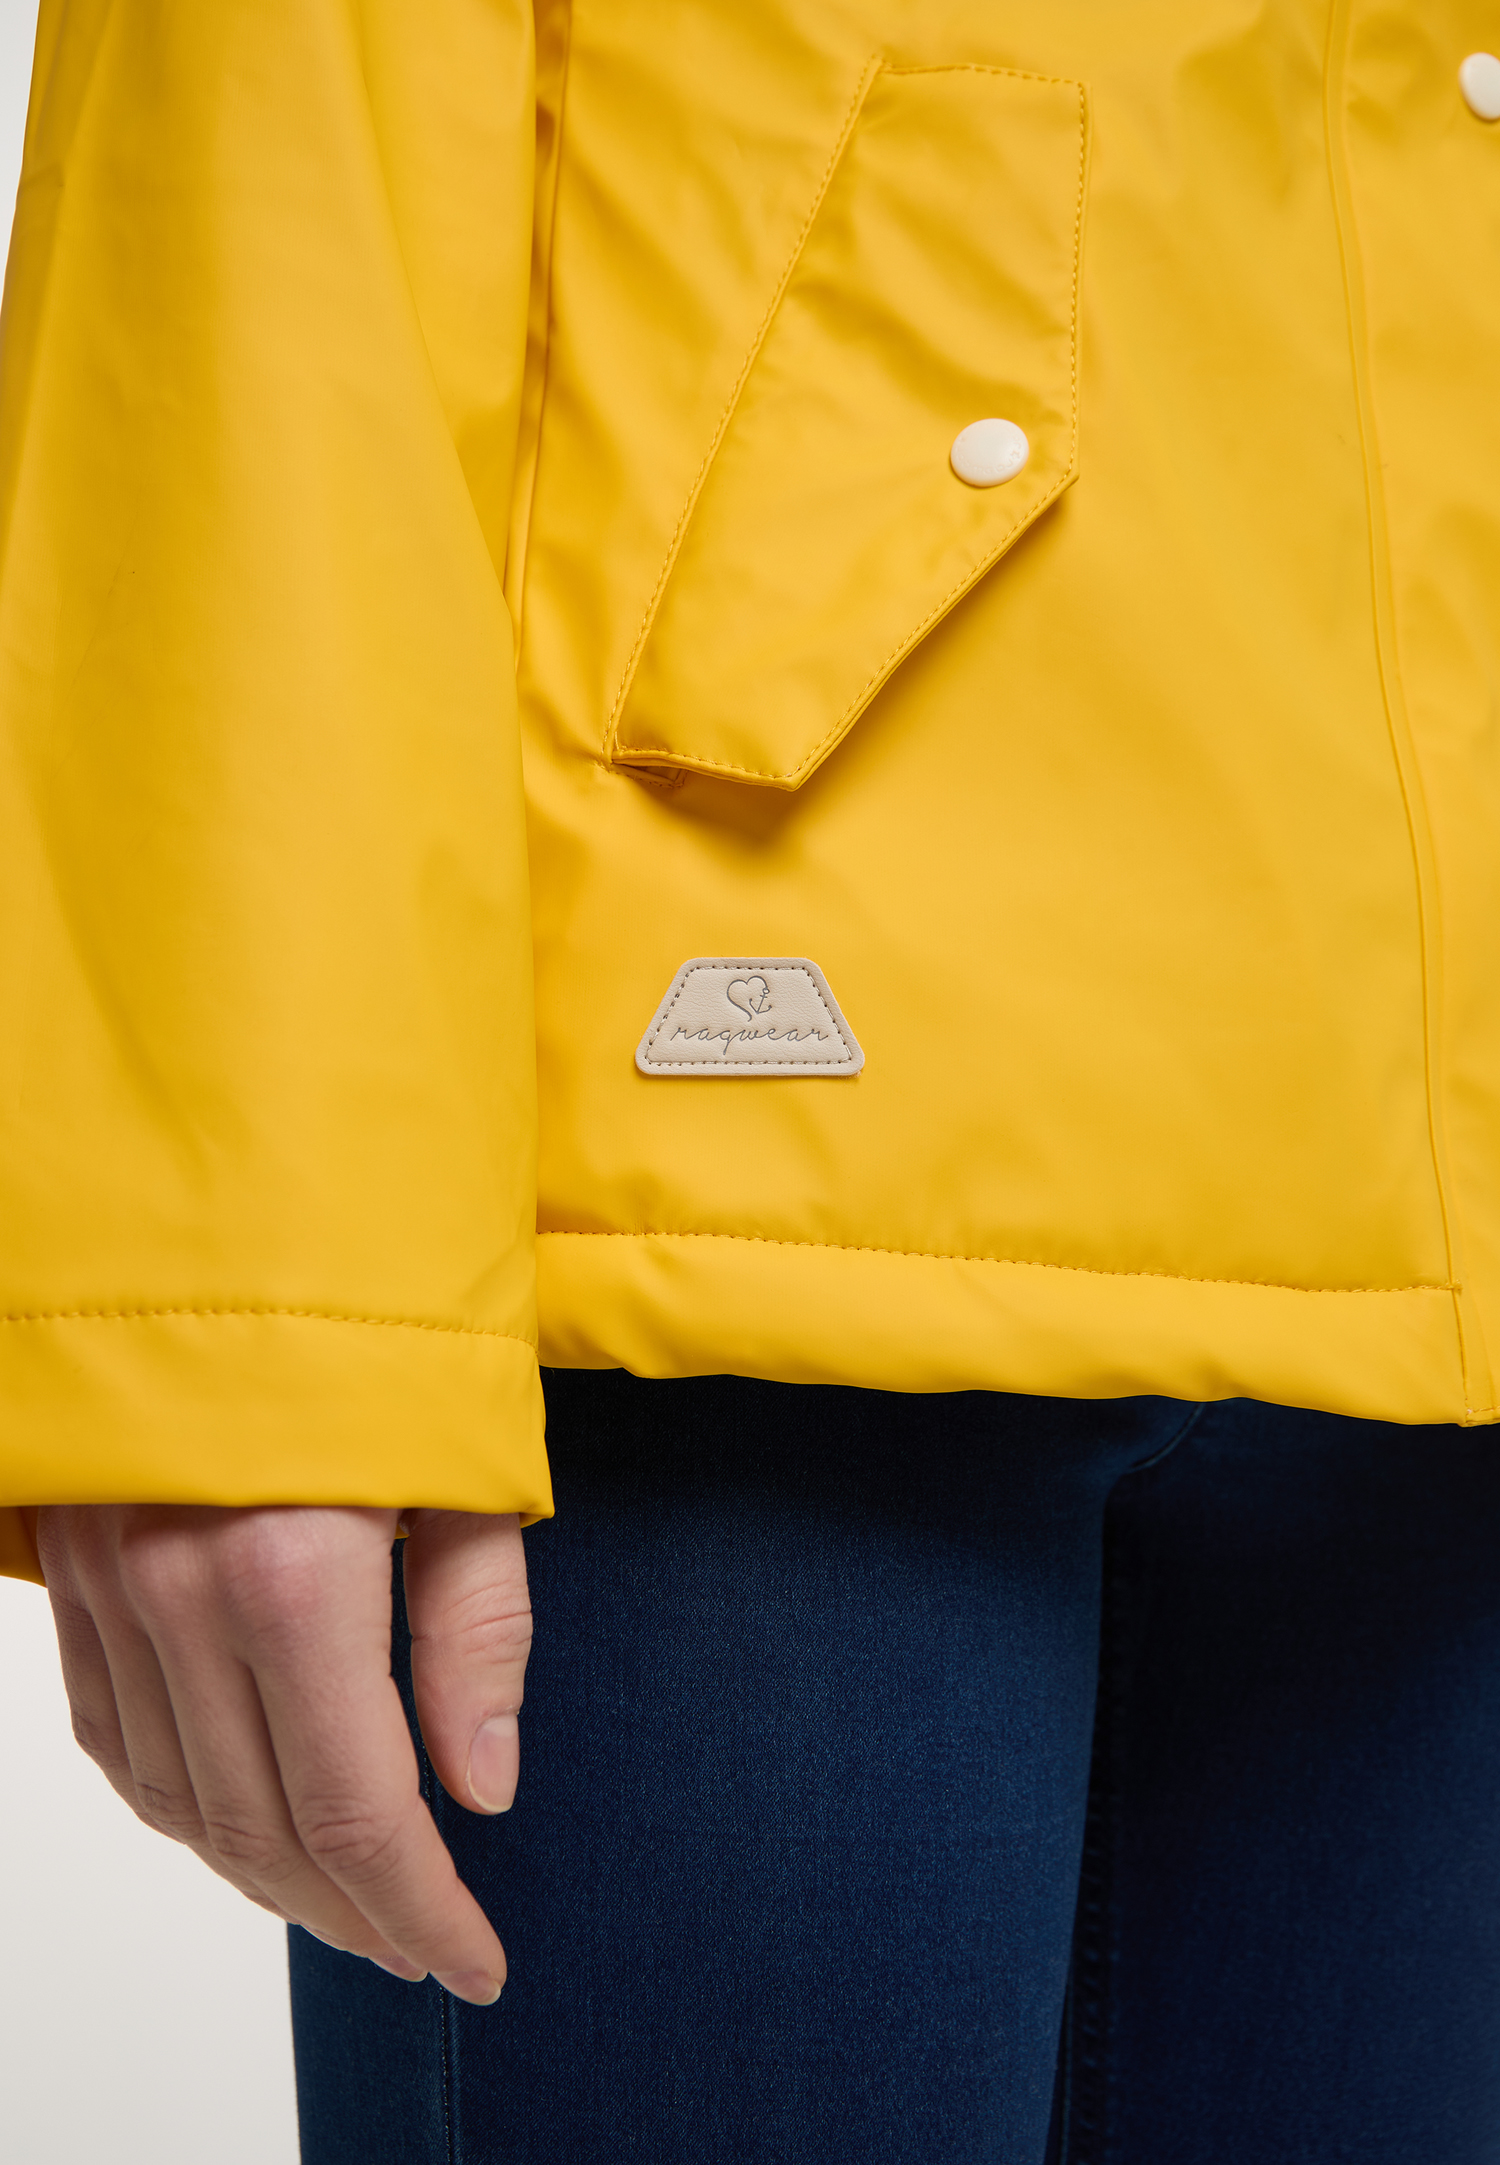 | | this wear Magazine Top Stylish ragwear rain jackets to season!